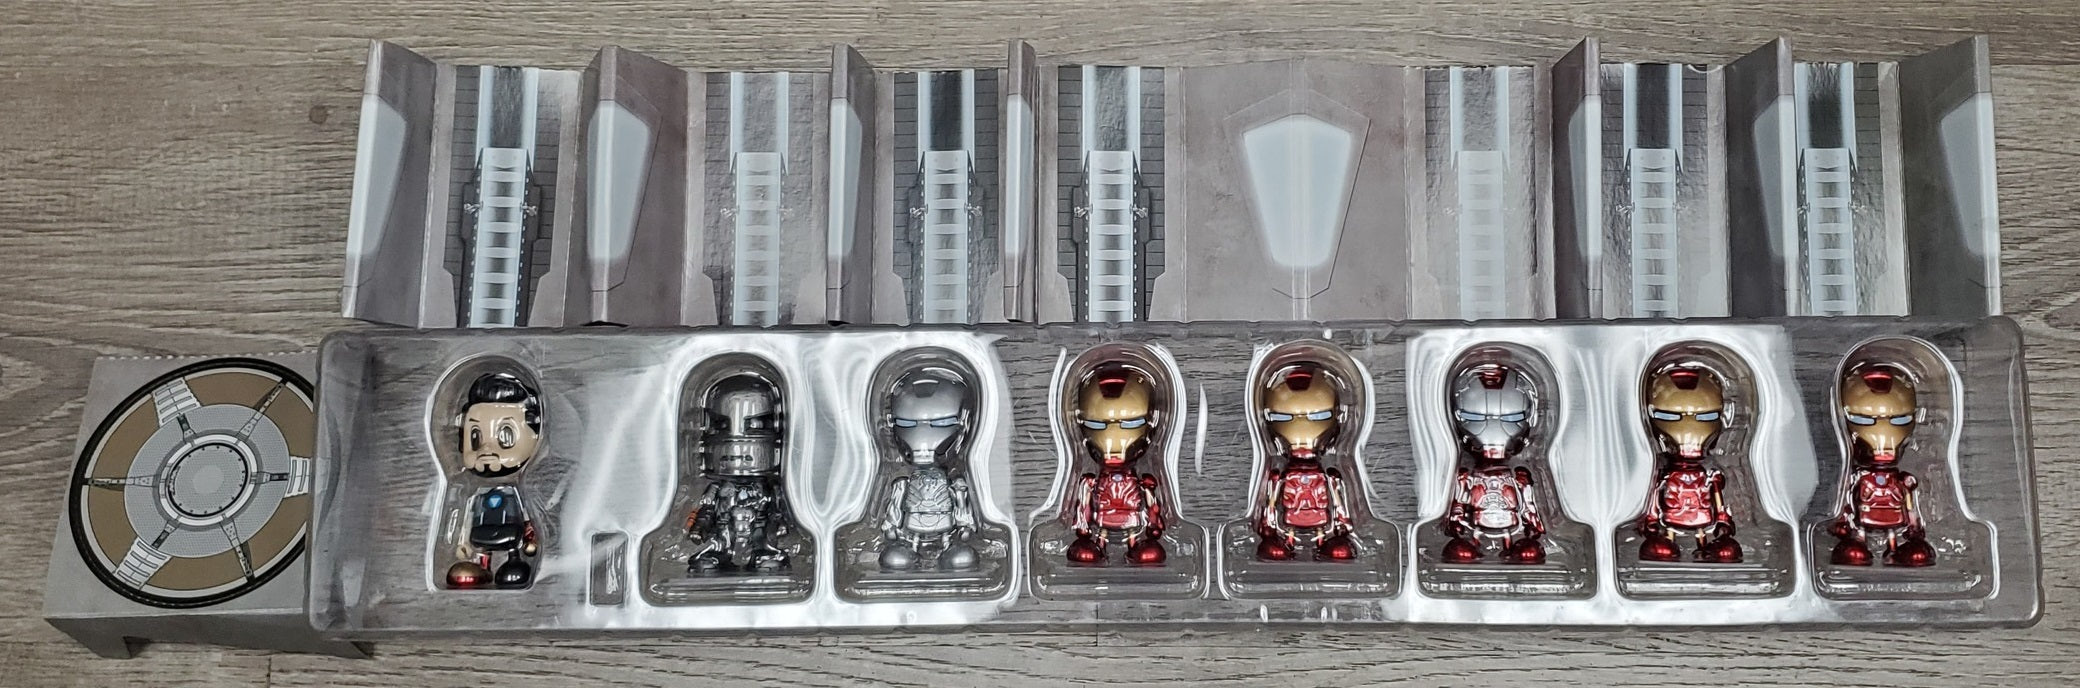 Hot Toys Cosbaby Iron Man 3 Box Set